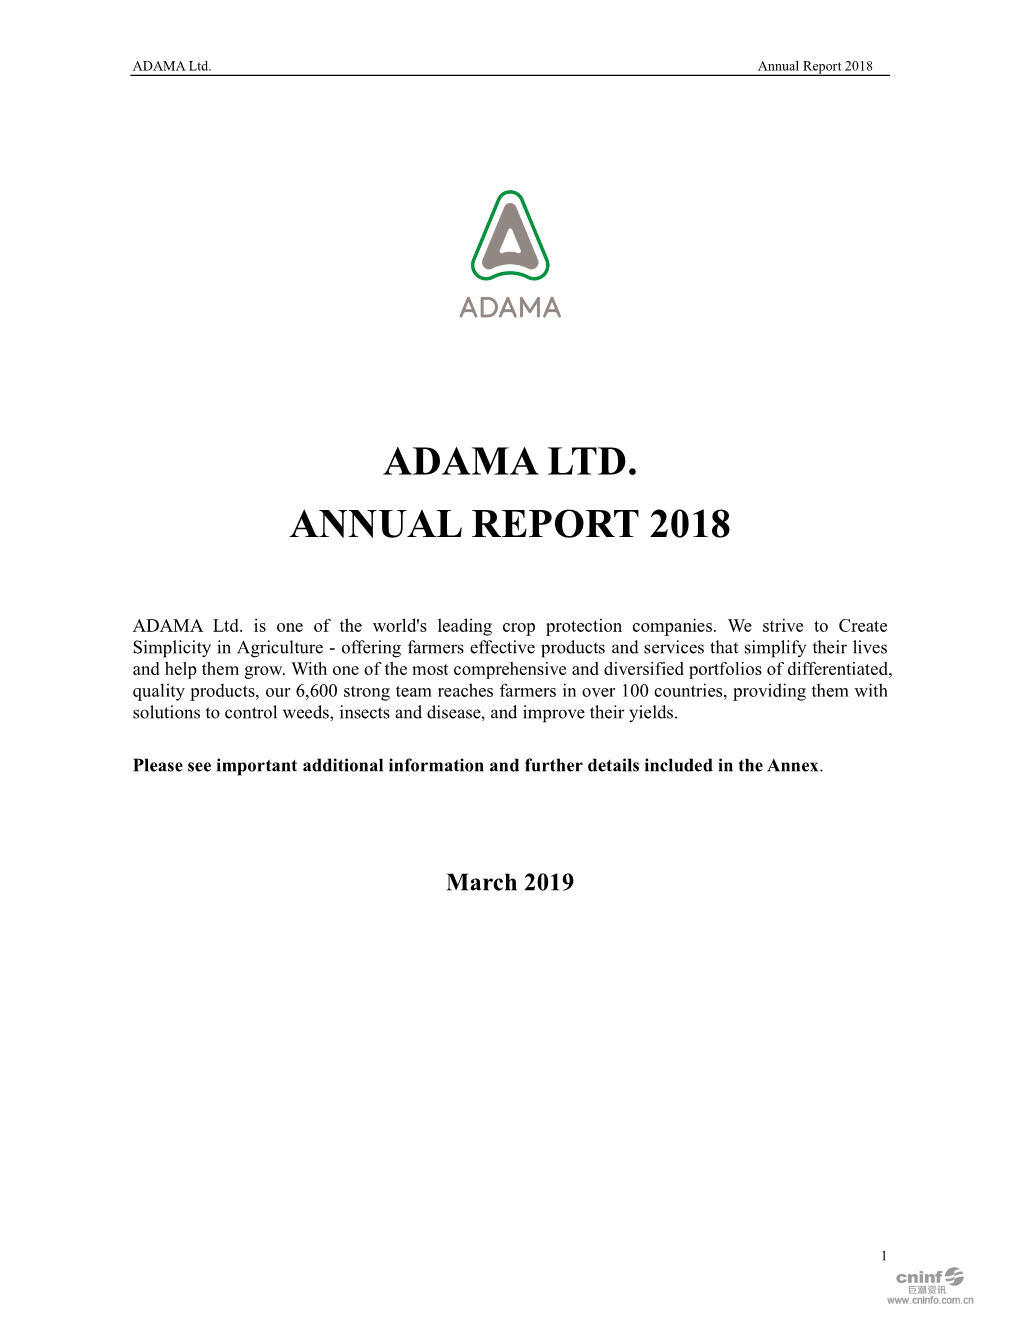 ADAMA Ltd. Annual Report 2018